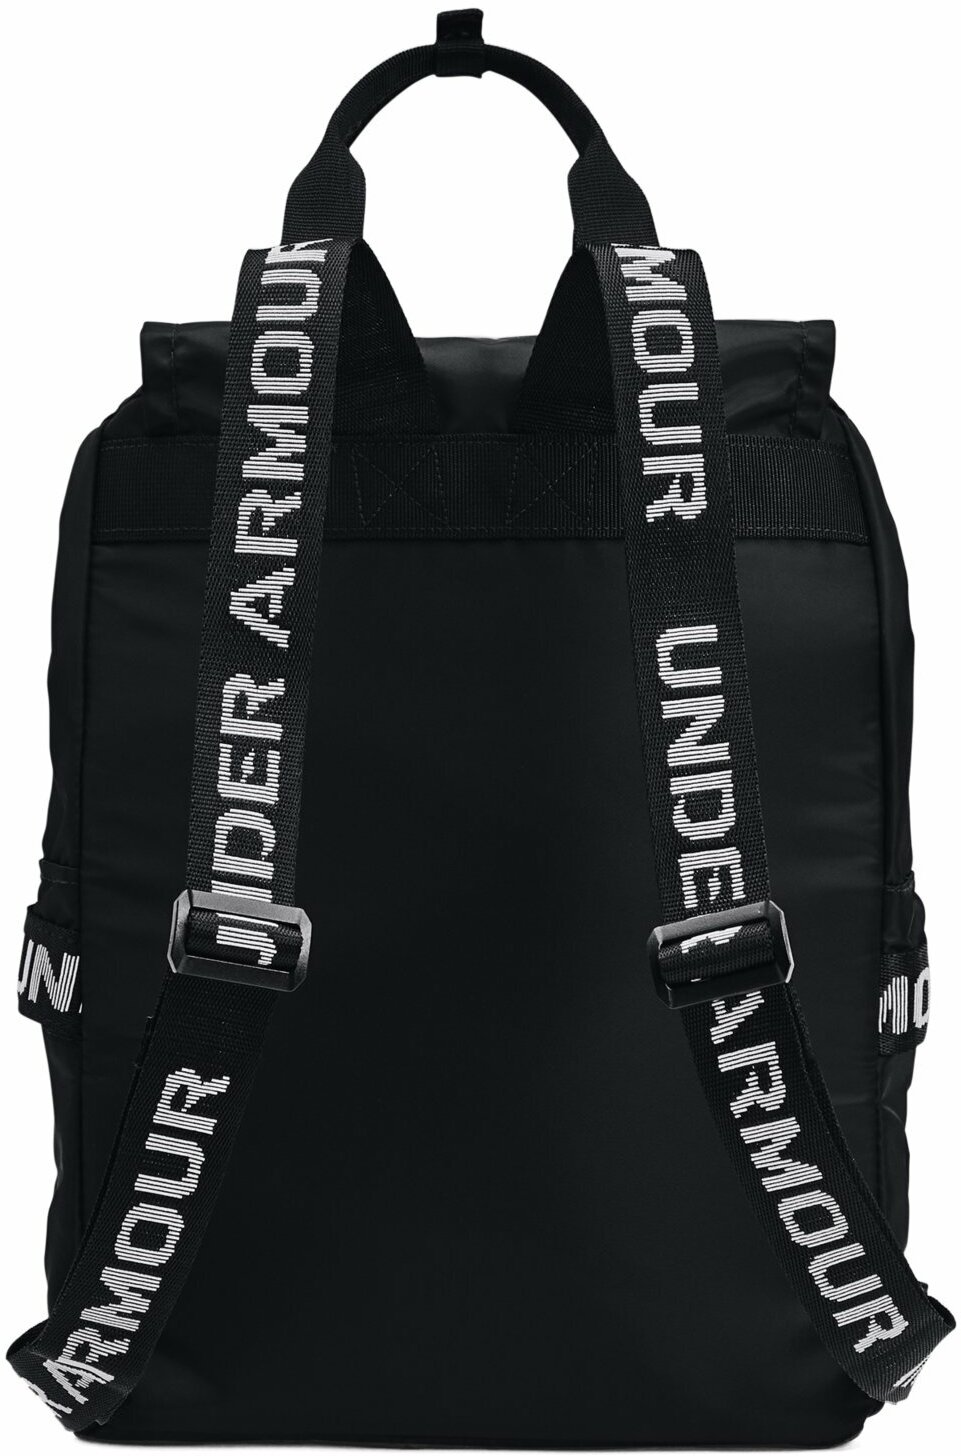 Городской рюкзак Under Armour Favorite Backpack, black / white